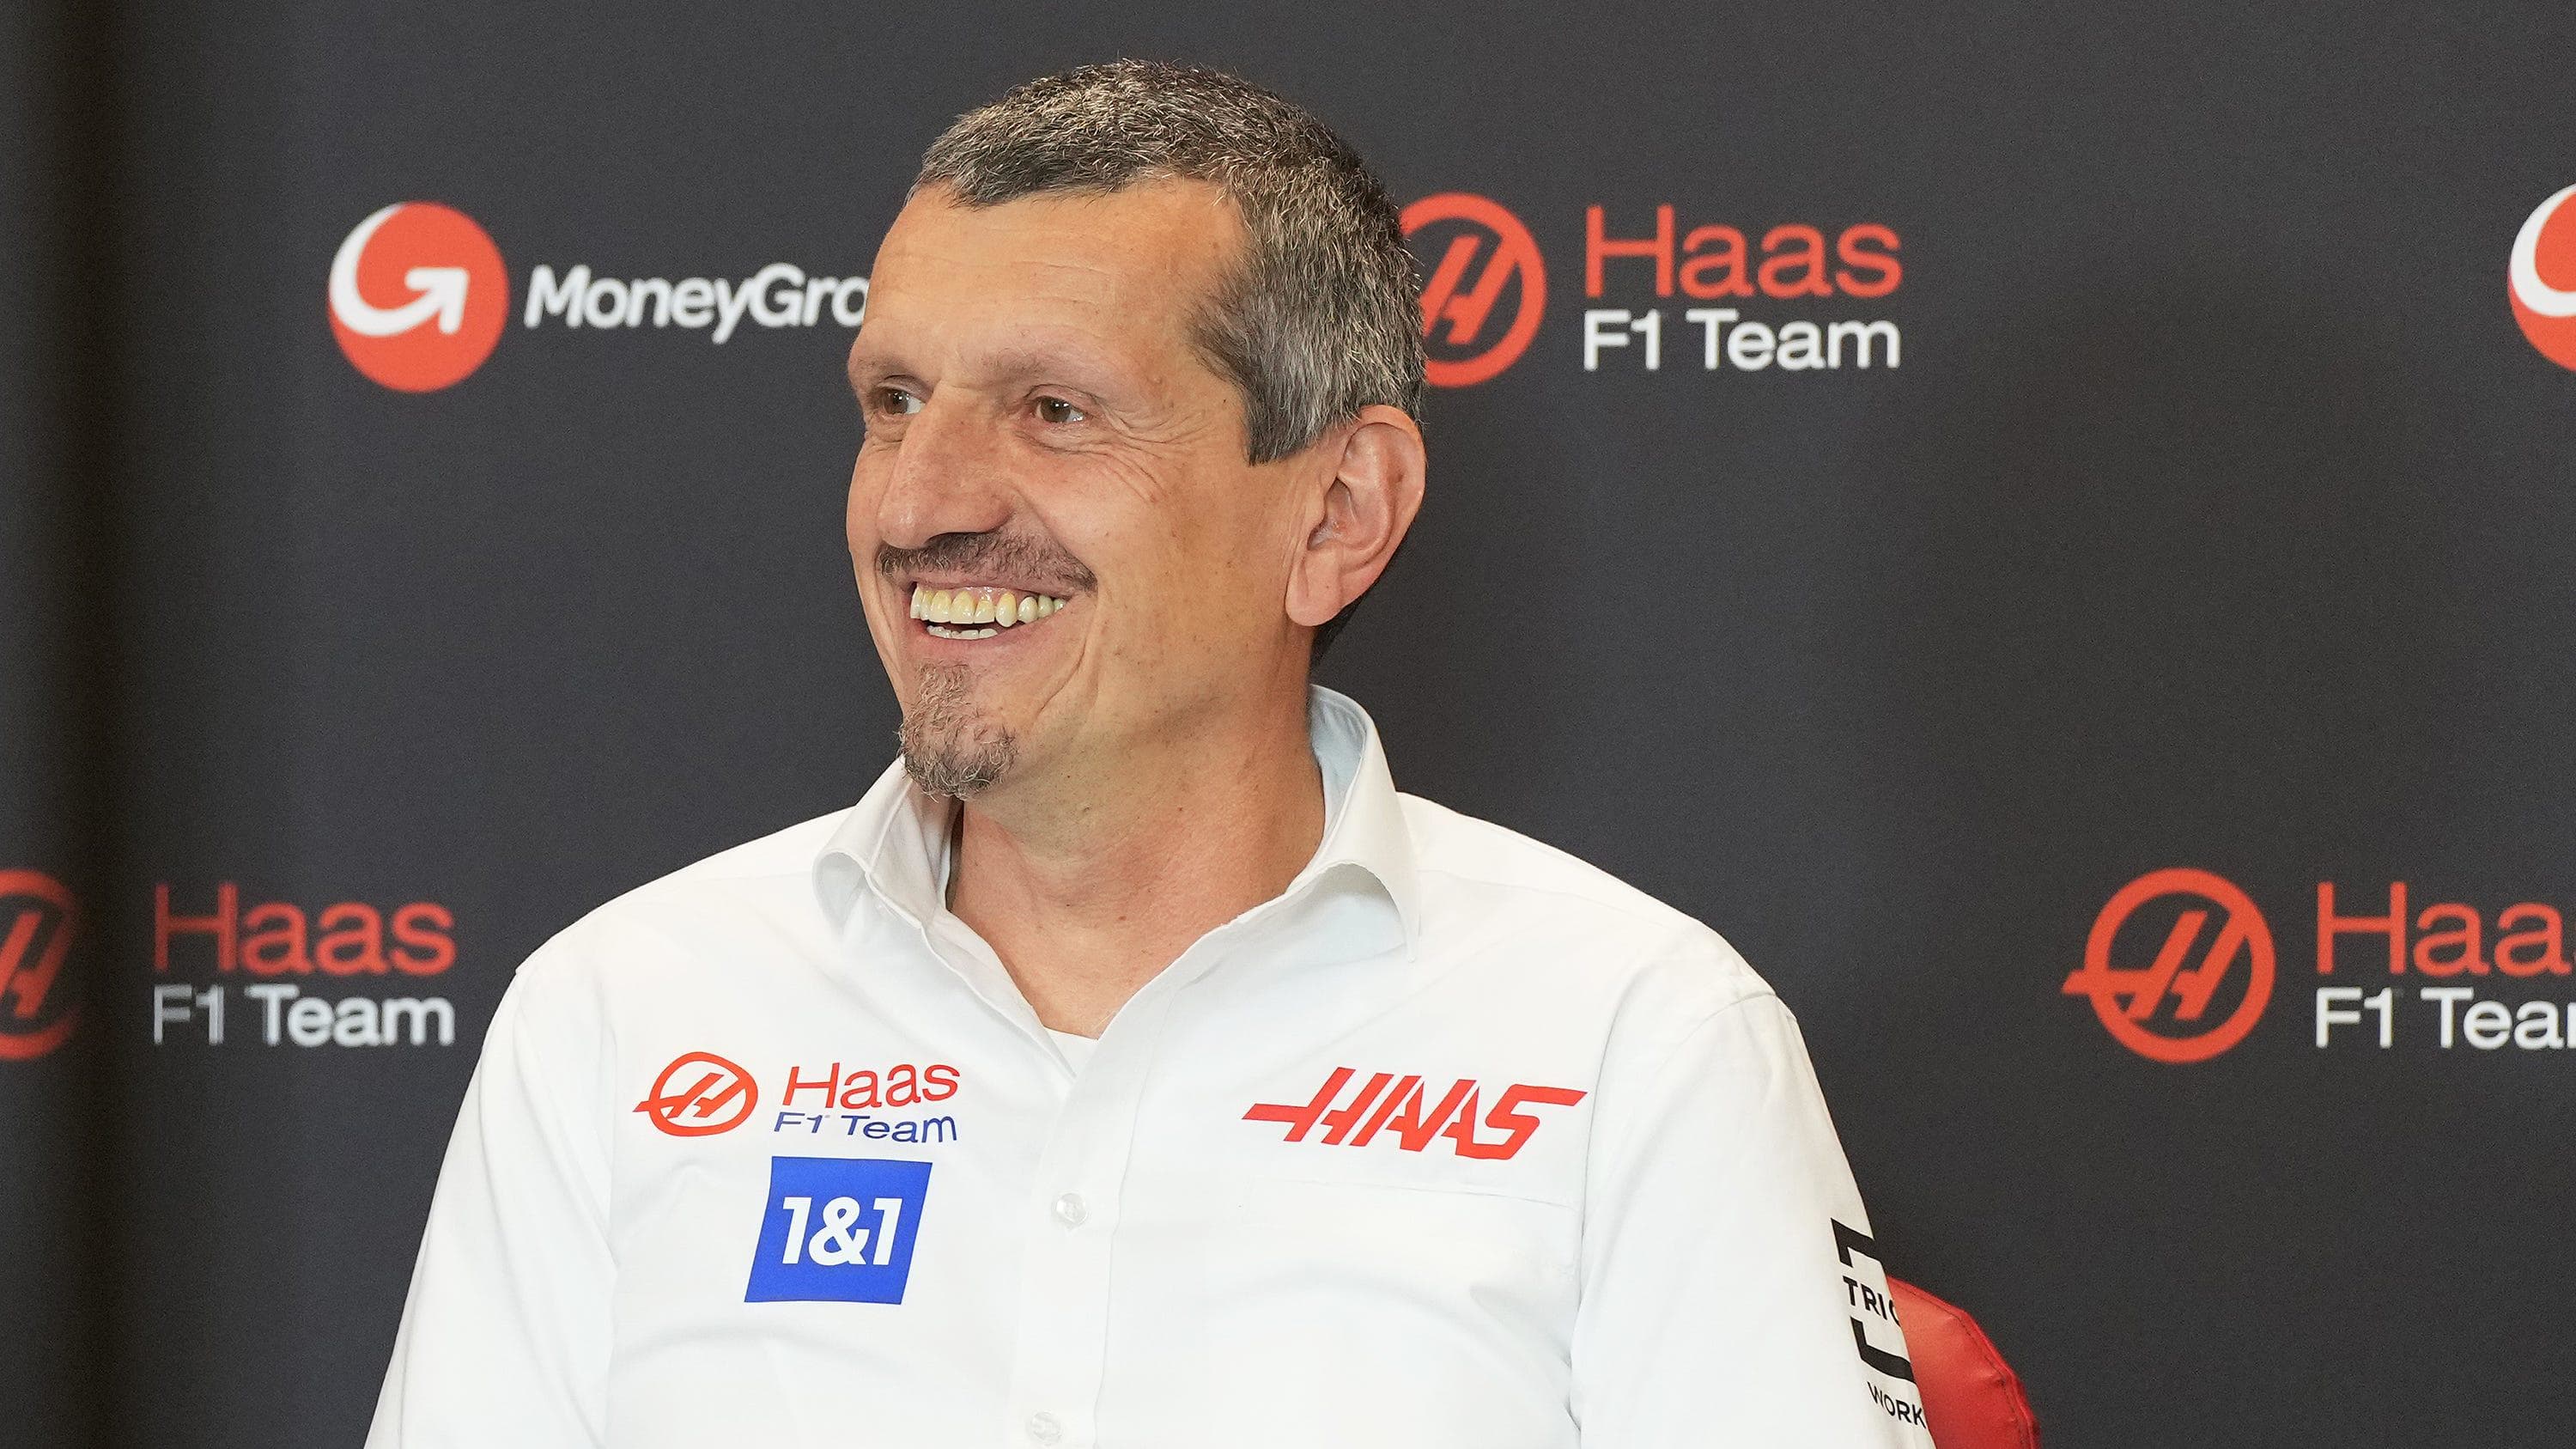 Guenther Steiner, team principal of Haas F1 Team, smiles as the team announces MoneyGram as their